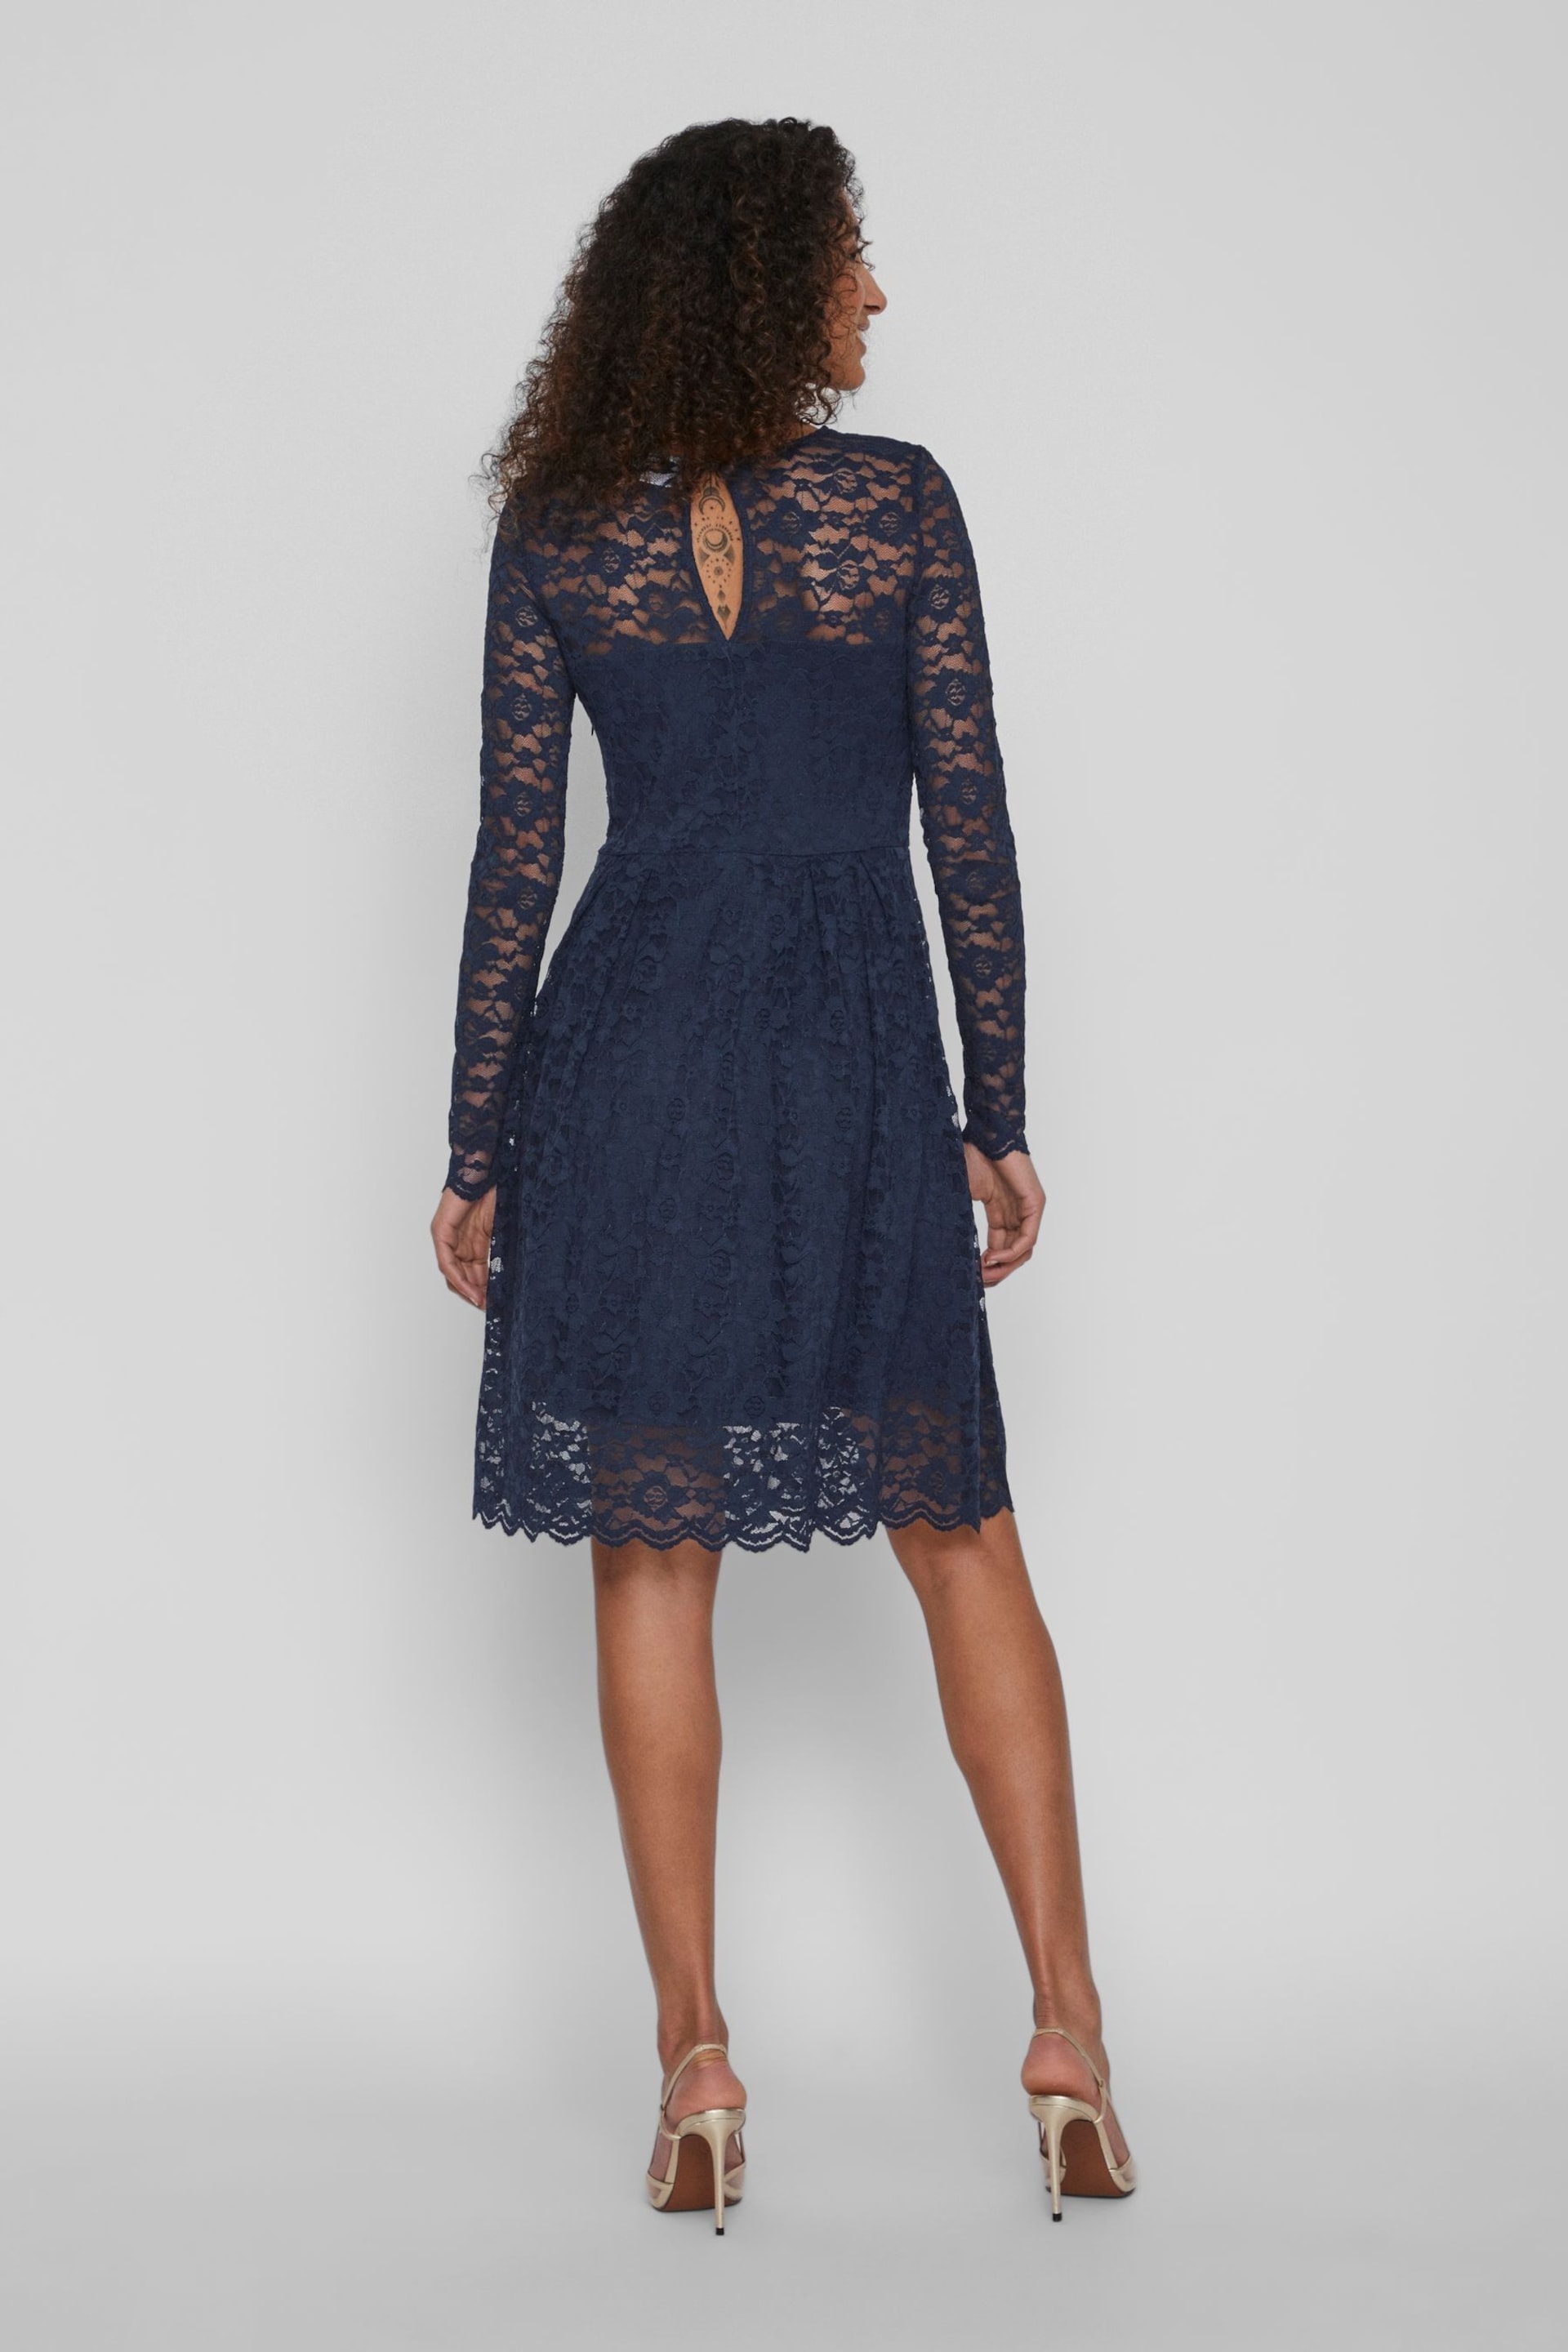 VILA Blue Long Sleeve Lace Dress - Image 2 of 5